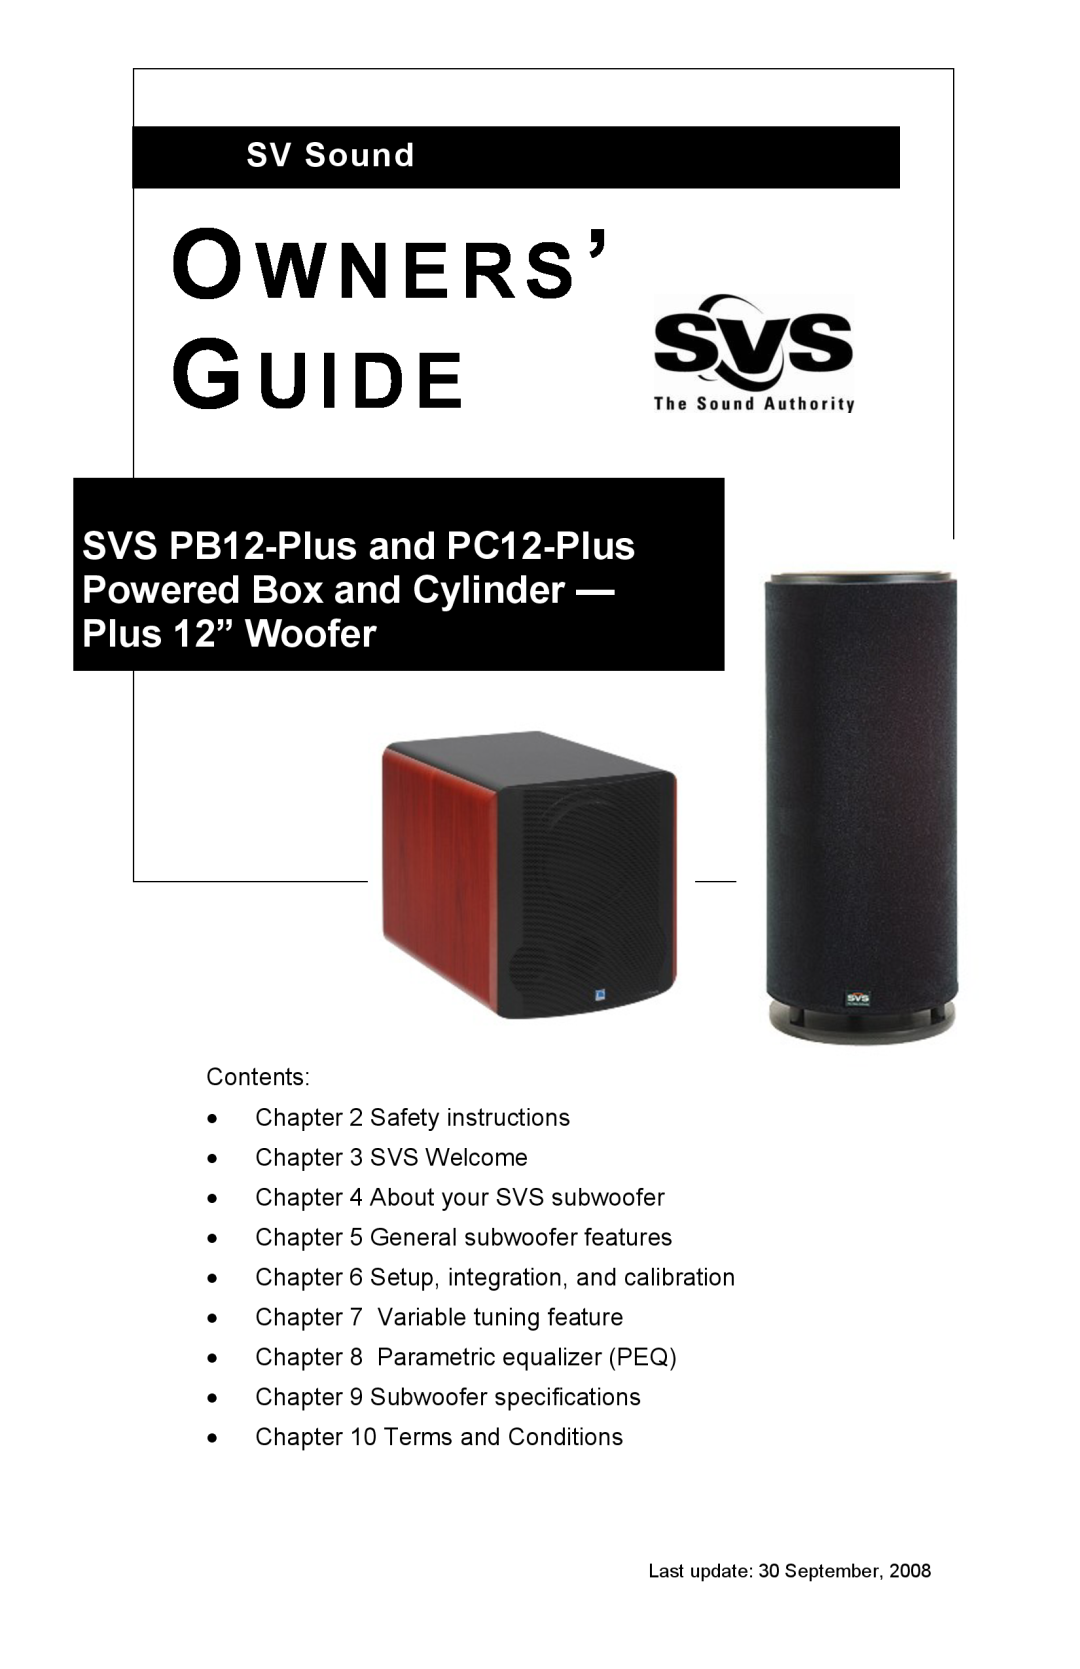 SV Sound PB12-ISD/V manual Contents, O W N E R S ’ G U I D E, SV Subwoofers, SVS PB12-Ultra, PB12-Plus, Page 1 Welcome 